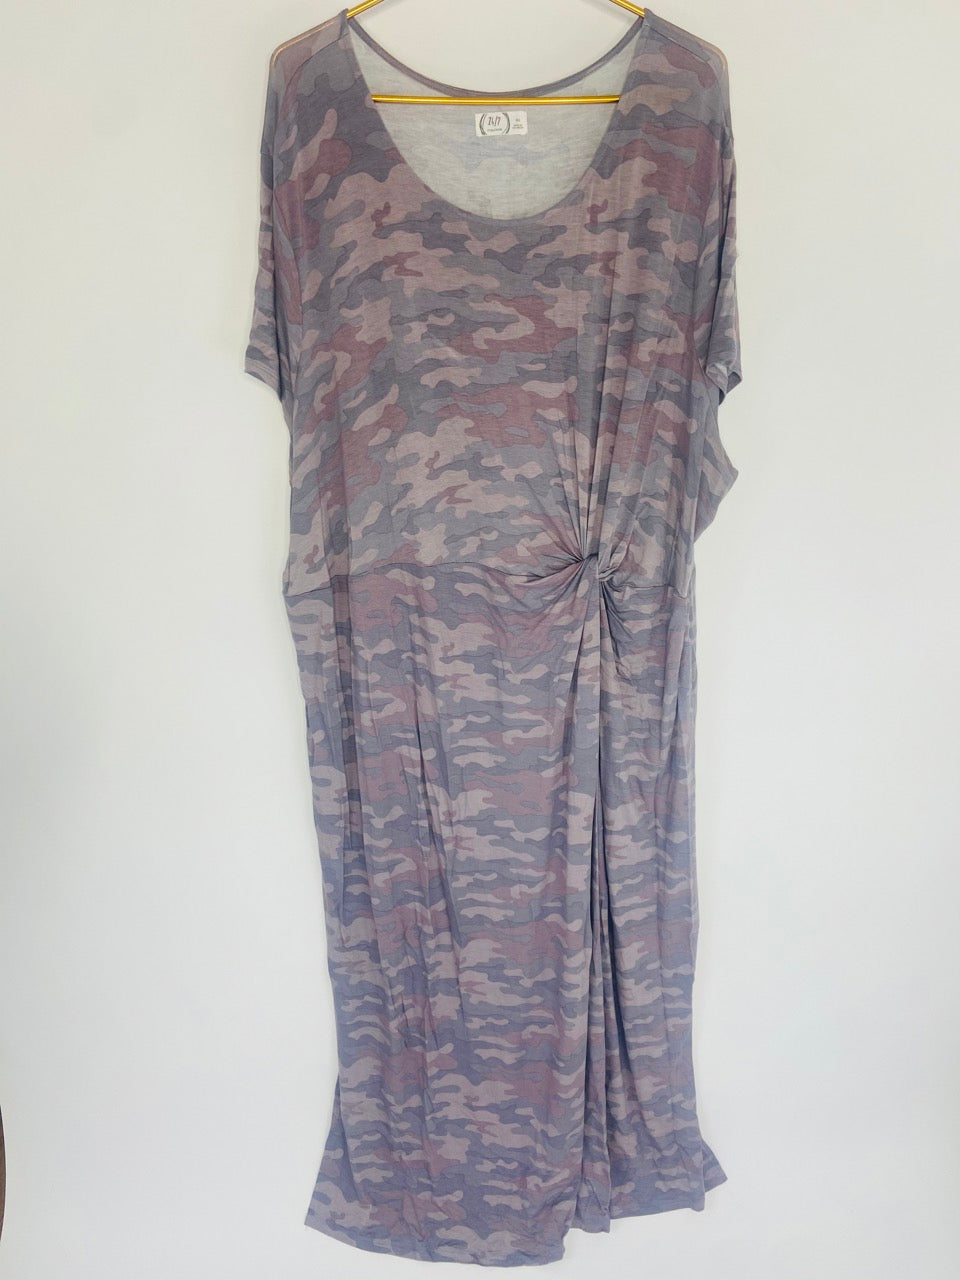 Moody Lavender Camo Stretchy Dress - 4X